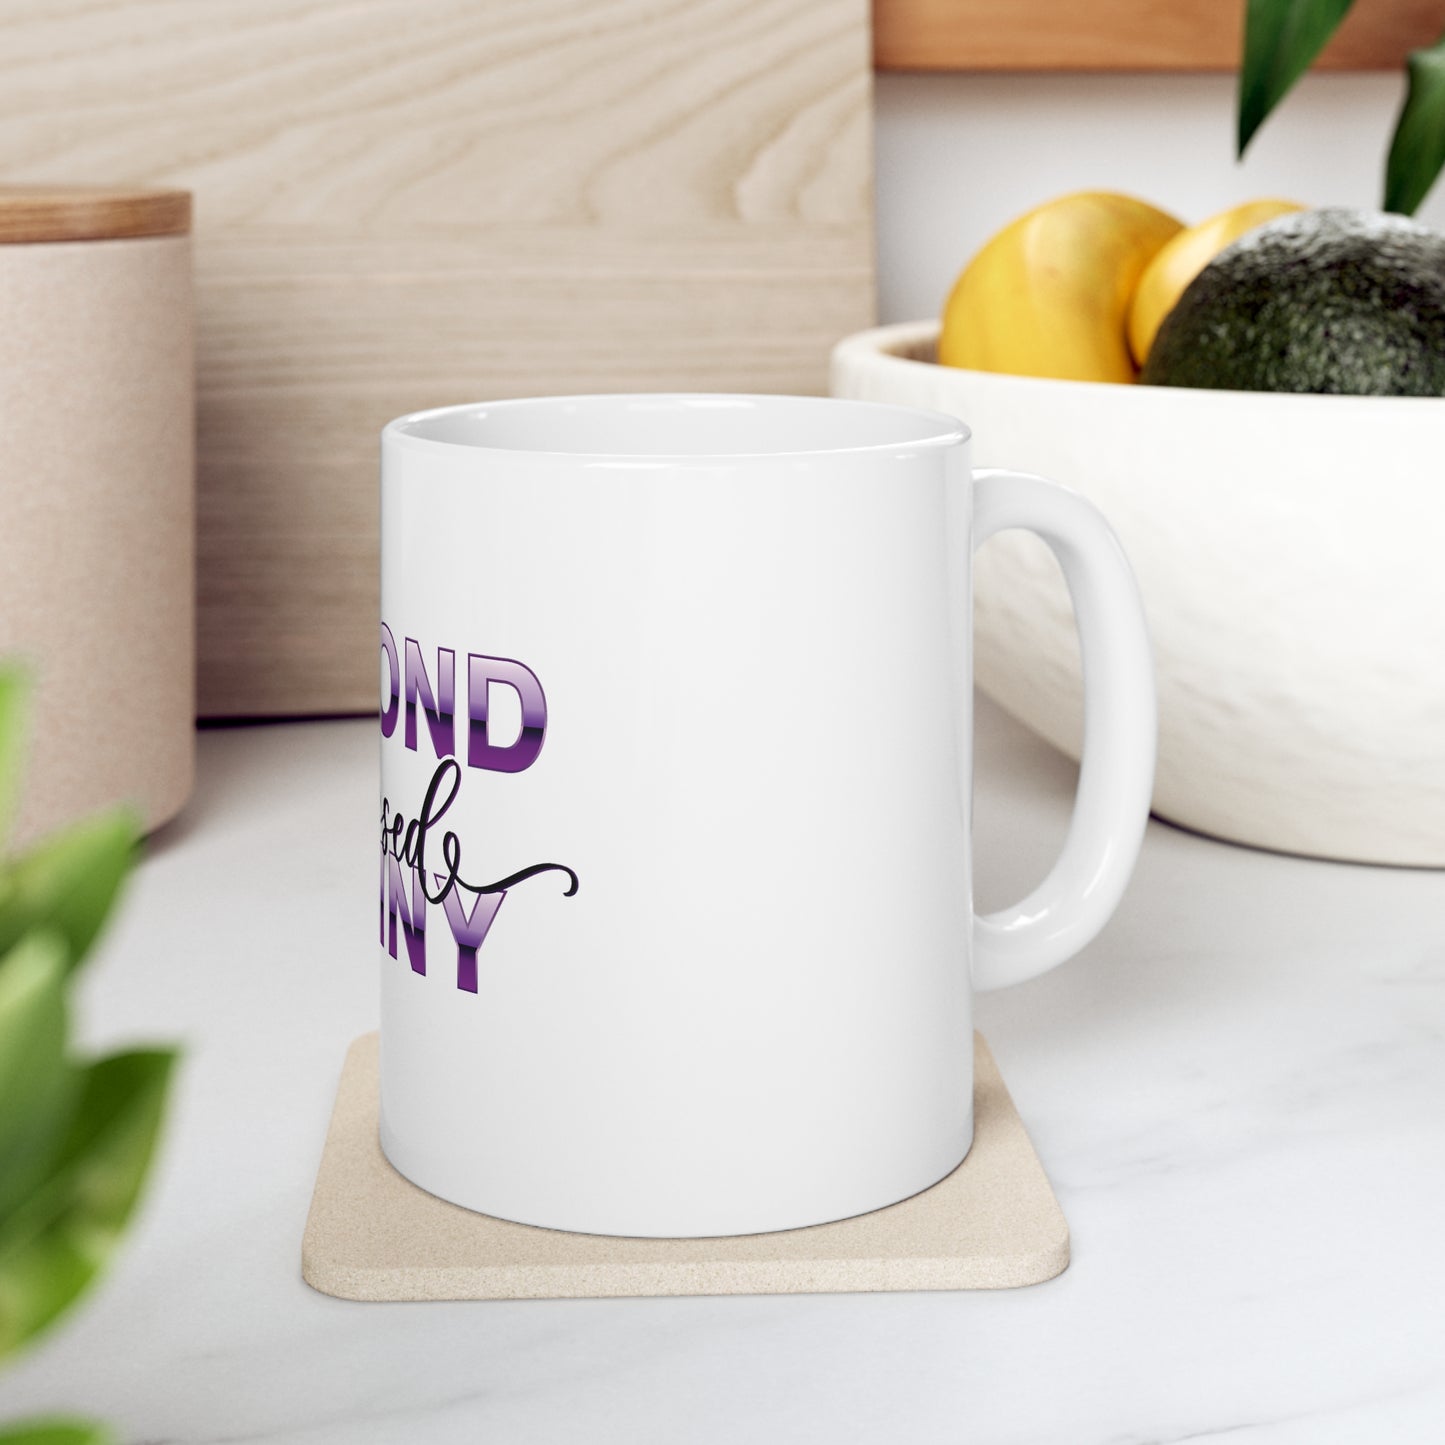 Beyond Blessed Nanny - Purple - Ceramic Mug 11oz